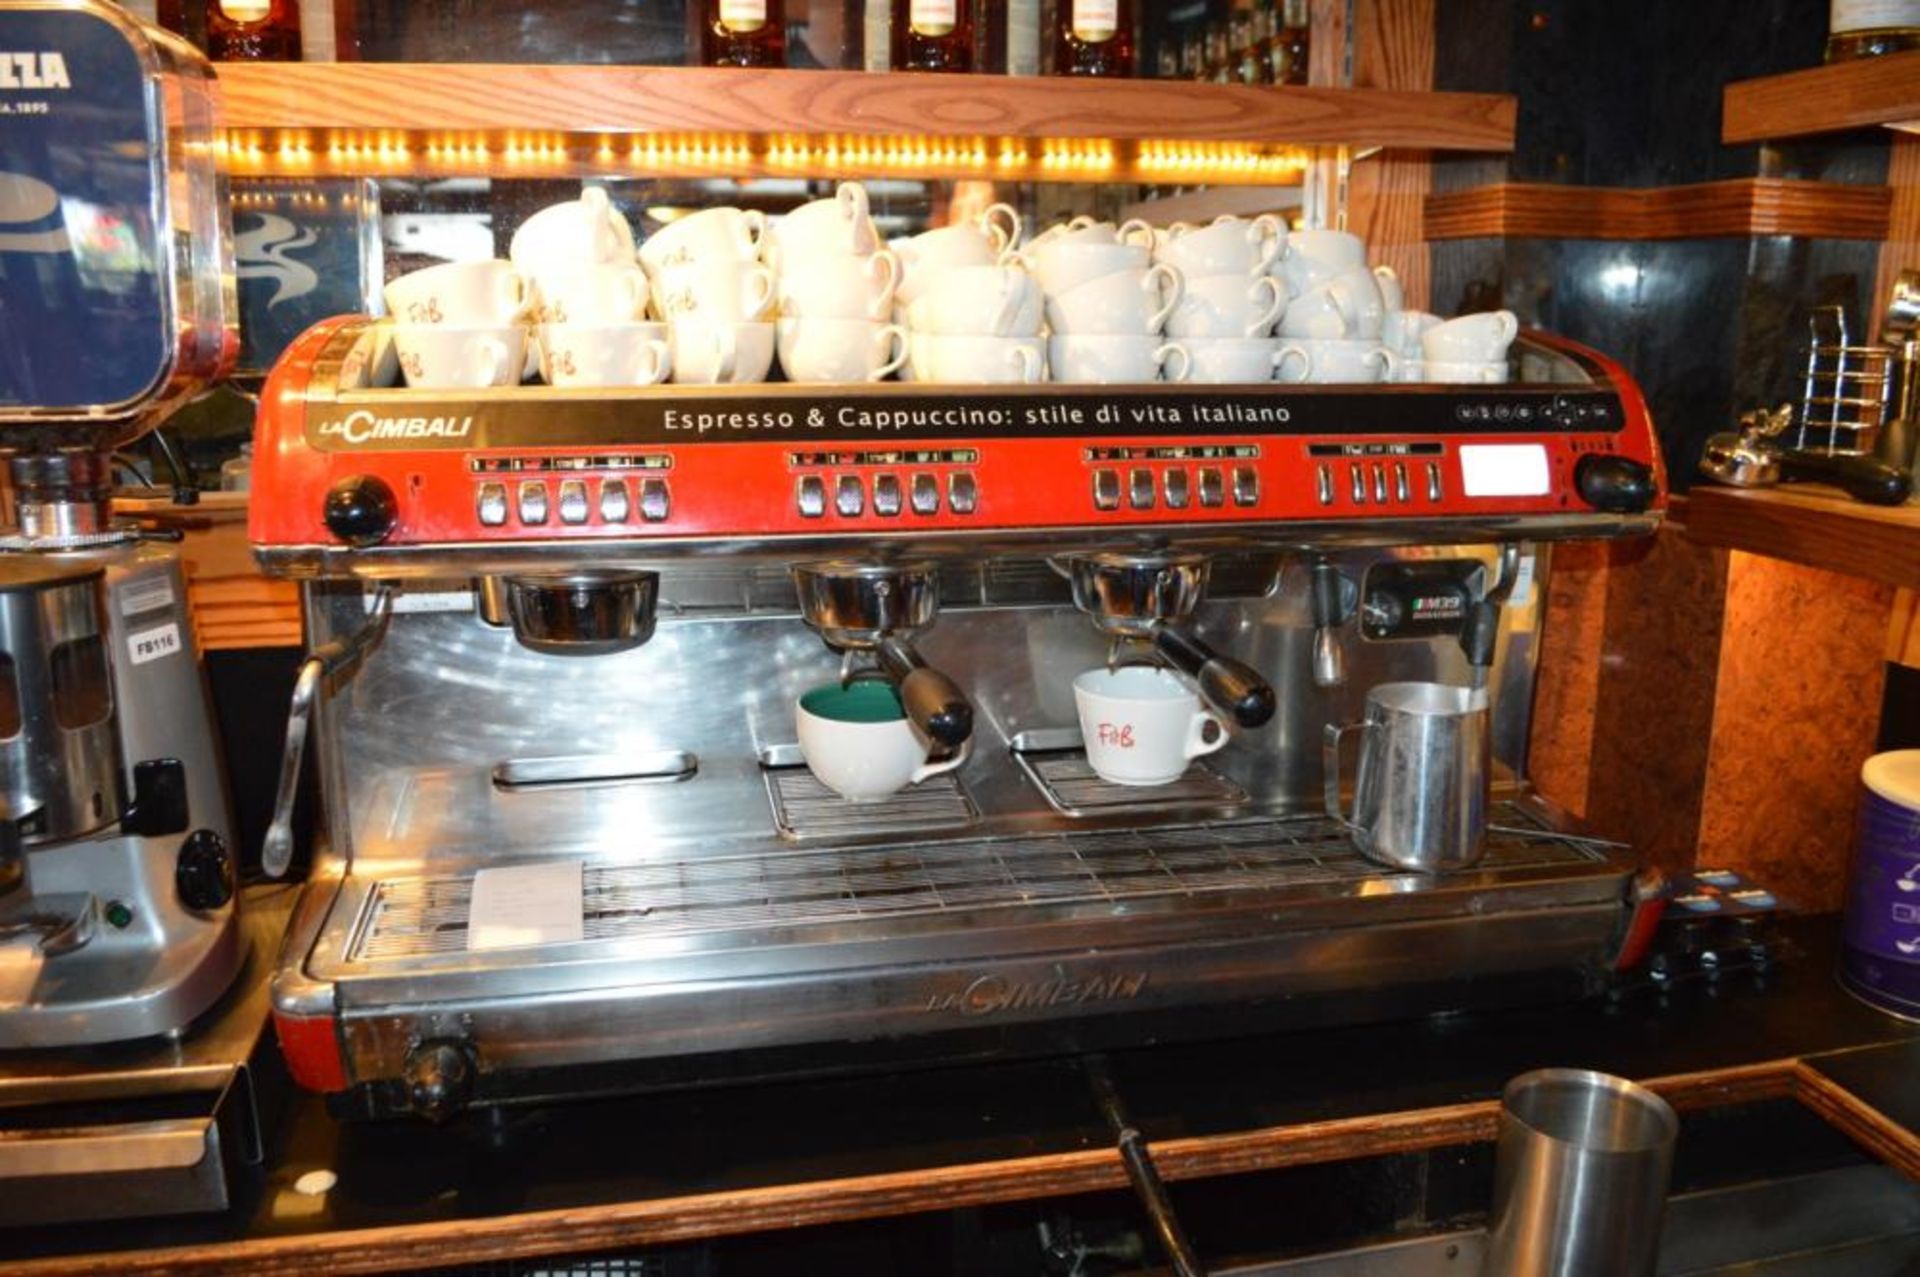 1 x La Cimbalie Espresso & Cappucino 3 Group Coffee Machine in Red - Model M39 DT3 TE - Ref FB115 - - Image 7 of 7